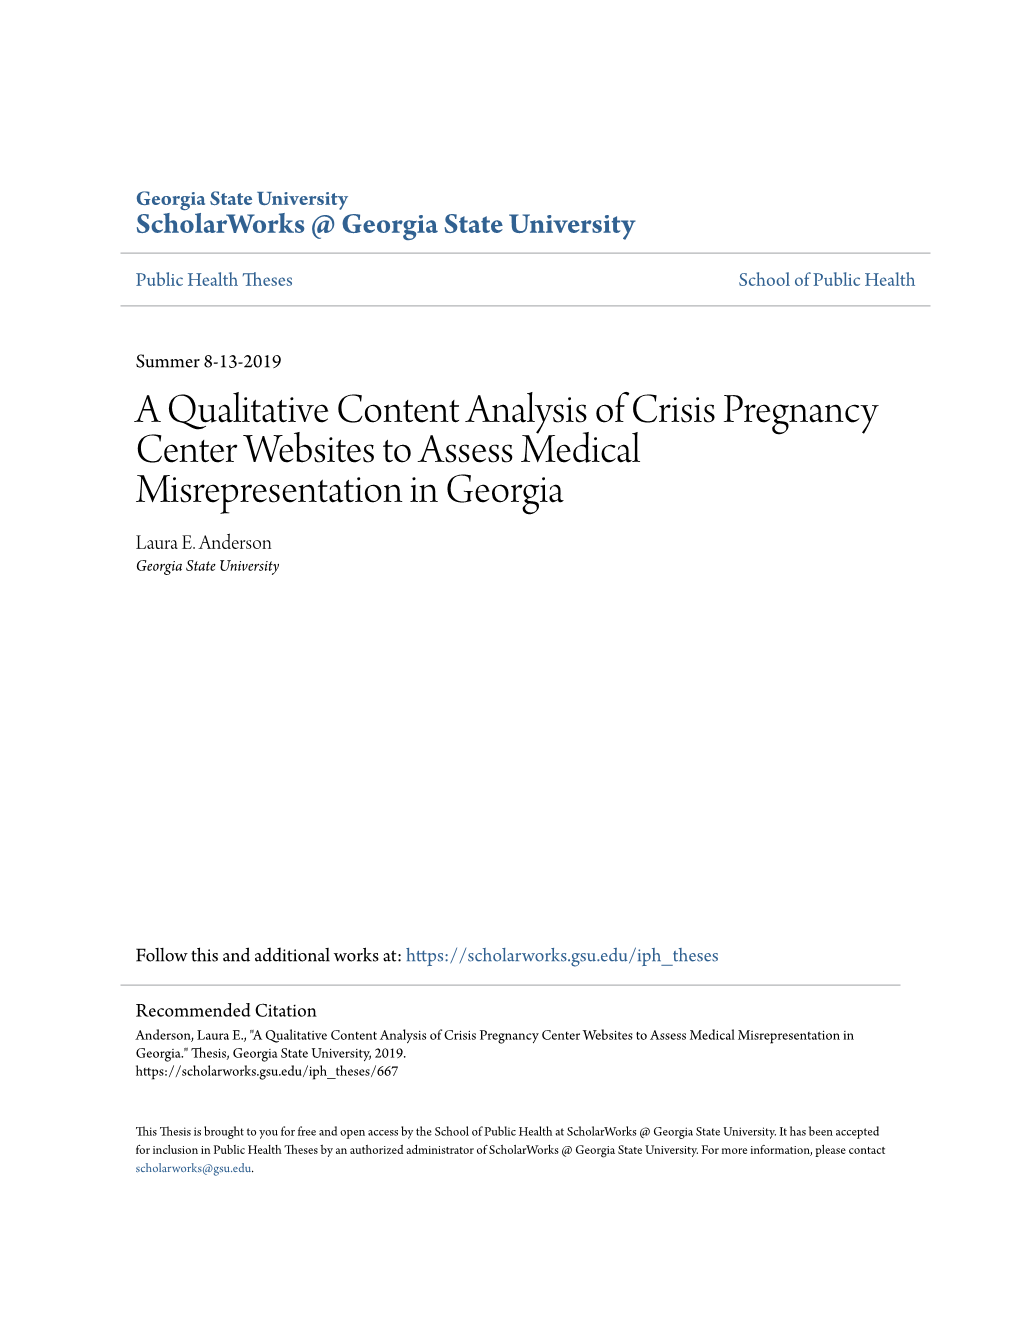 A Qualitative Content Analysis of Crisis Pregnancy Center Websites to Assess Medical Misrepresentation in Georgia Laura E